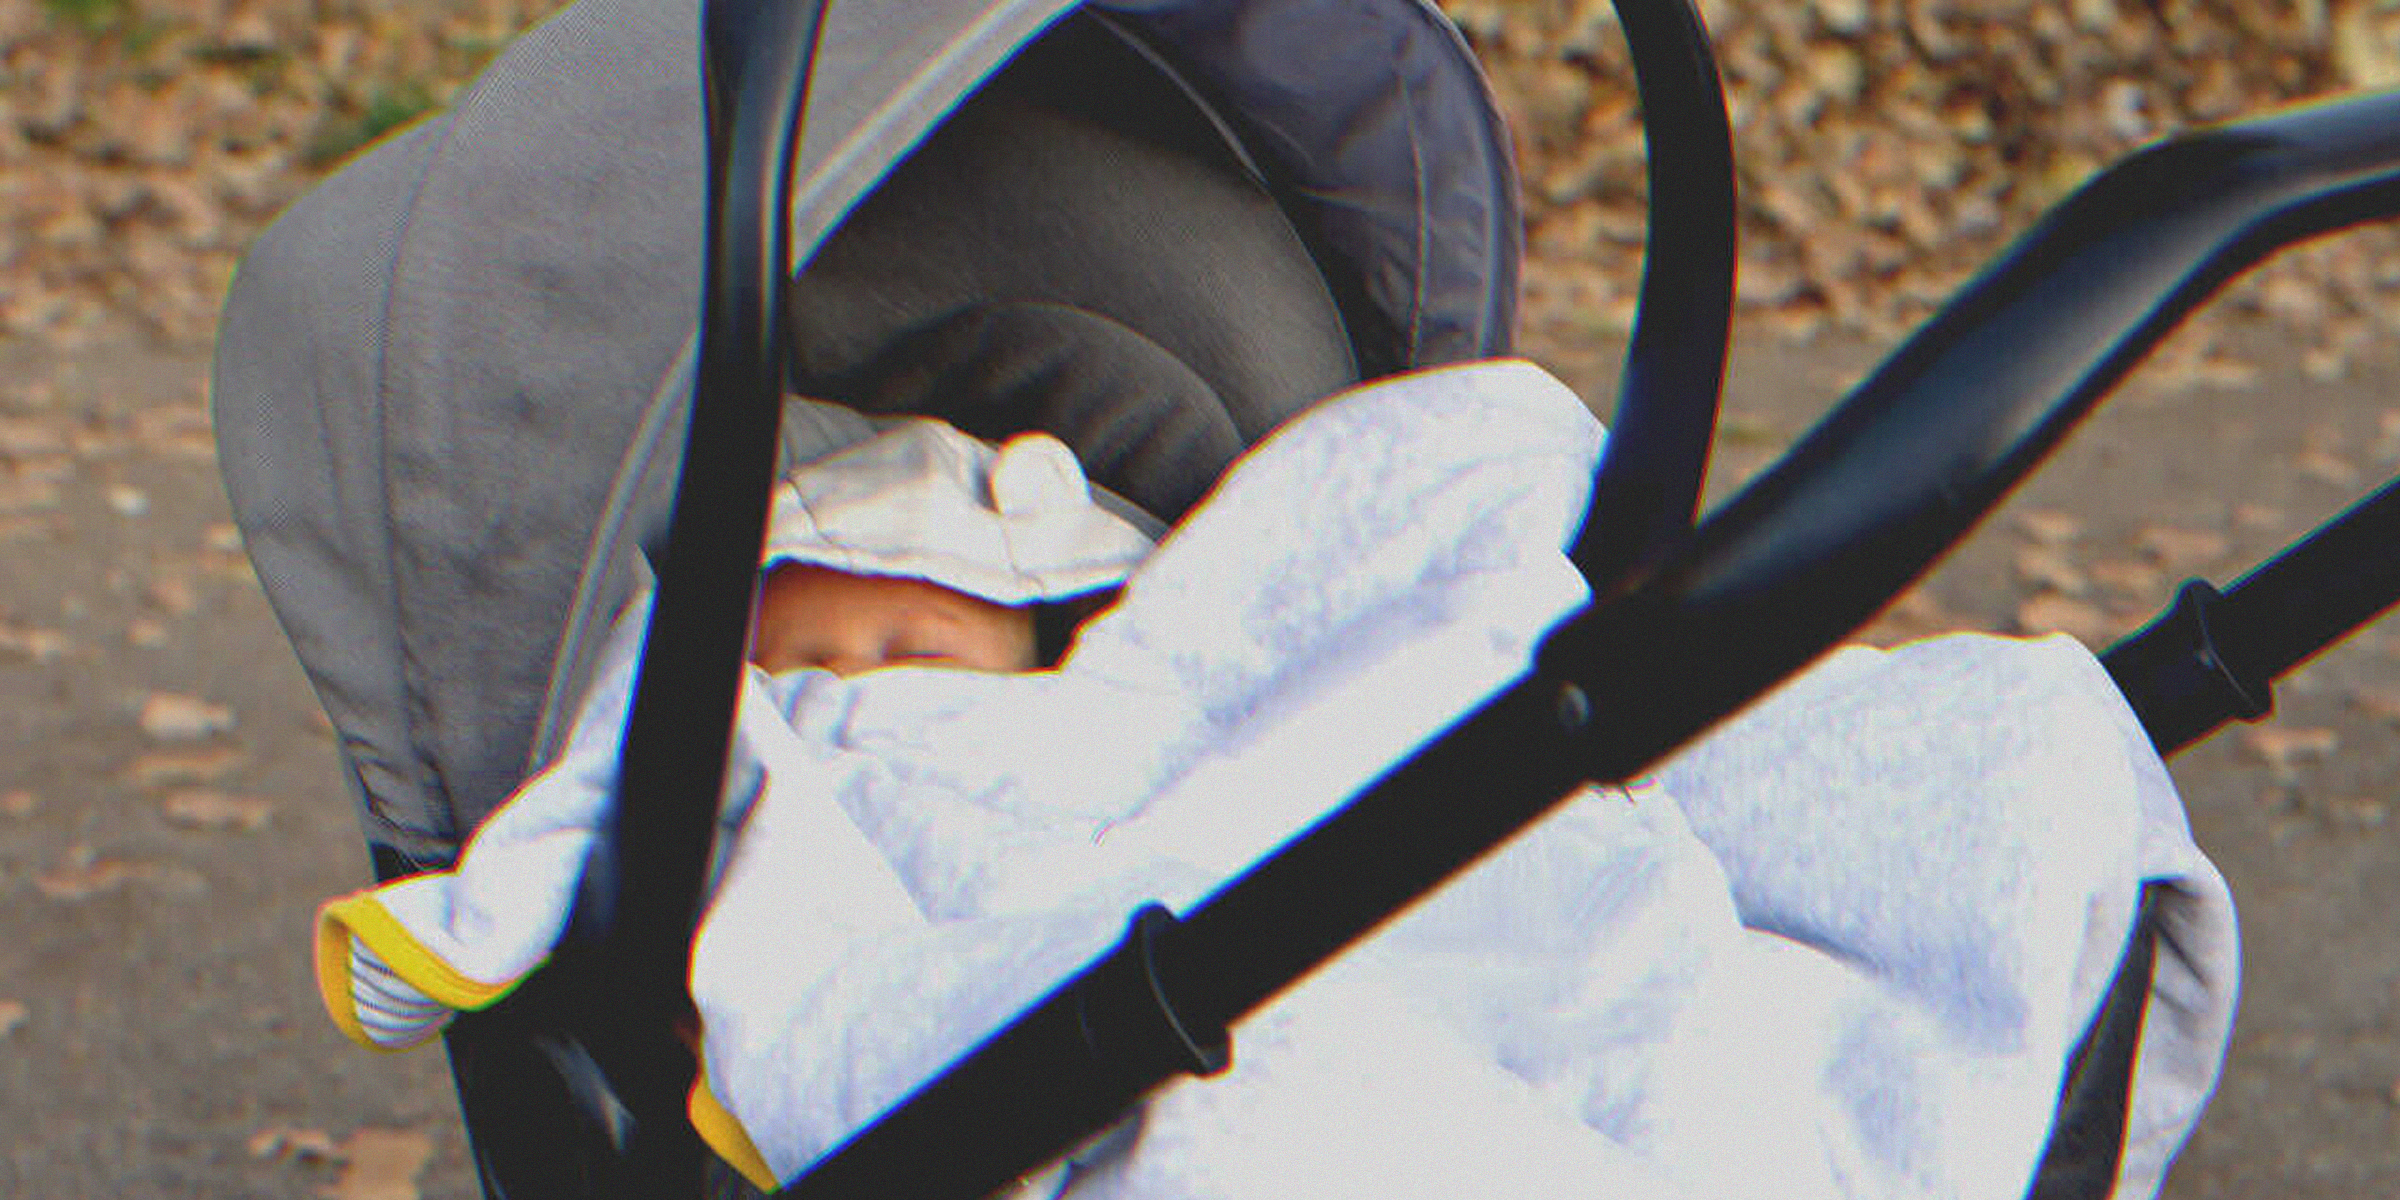 A baby in a stroller | Source: Shutterstock